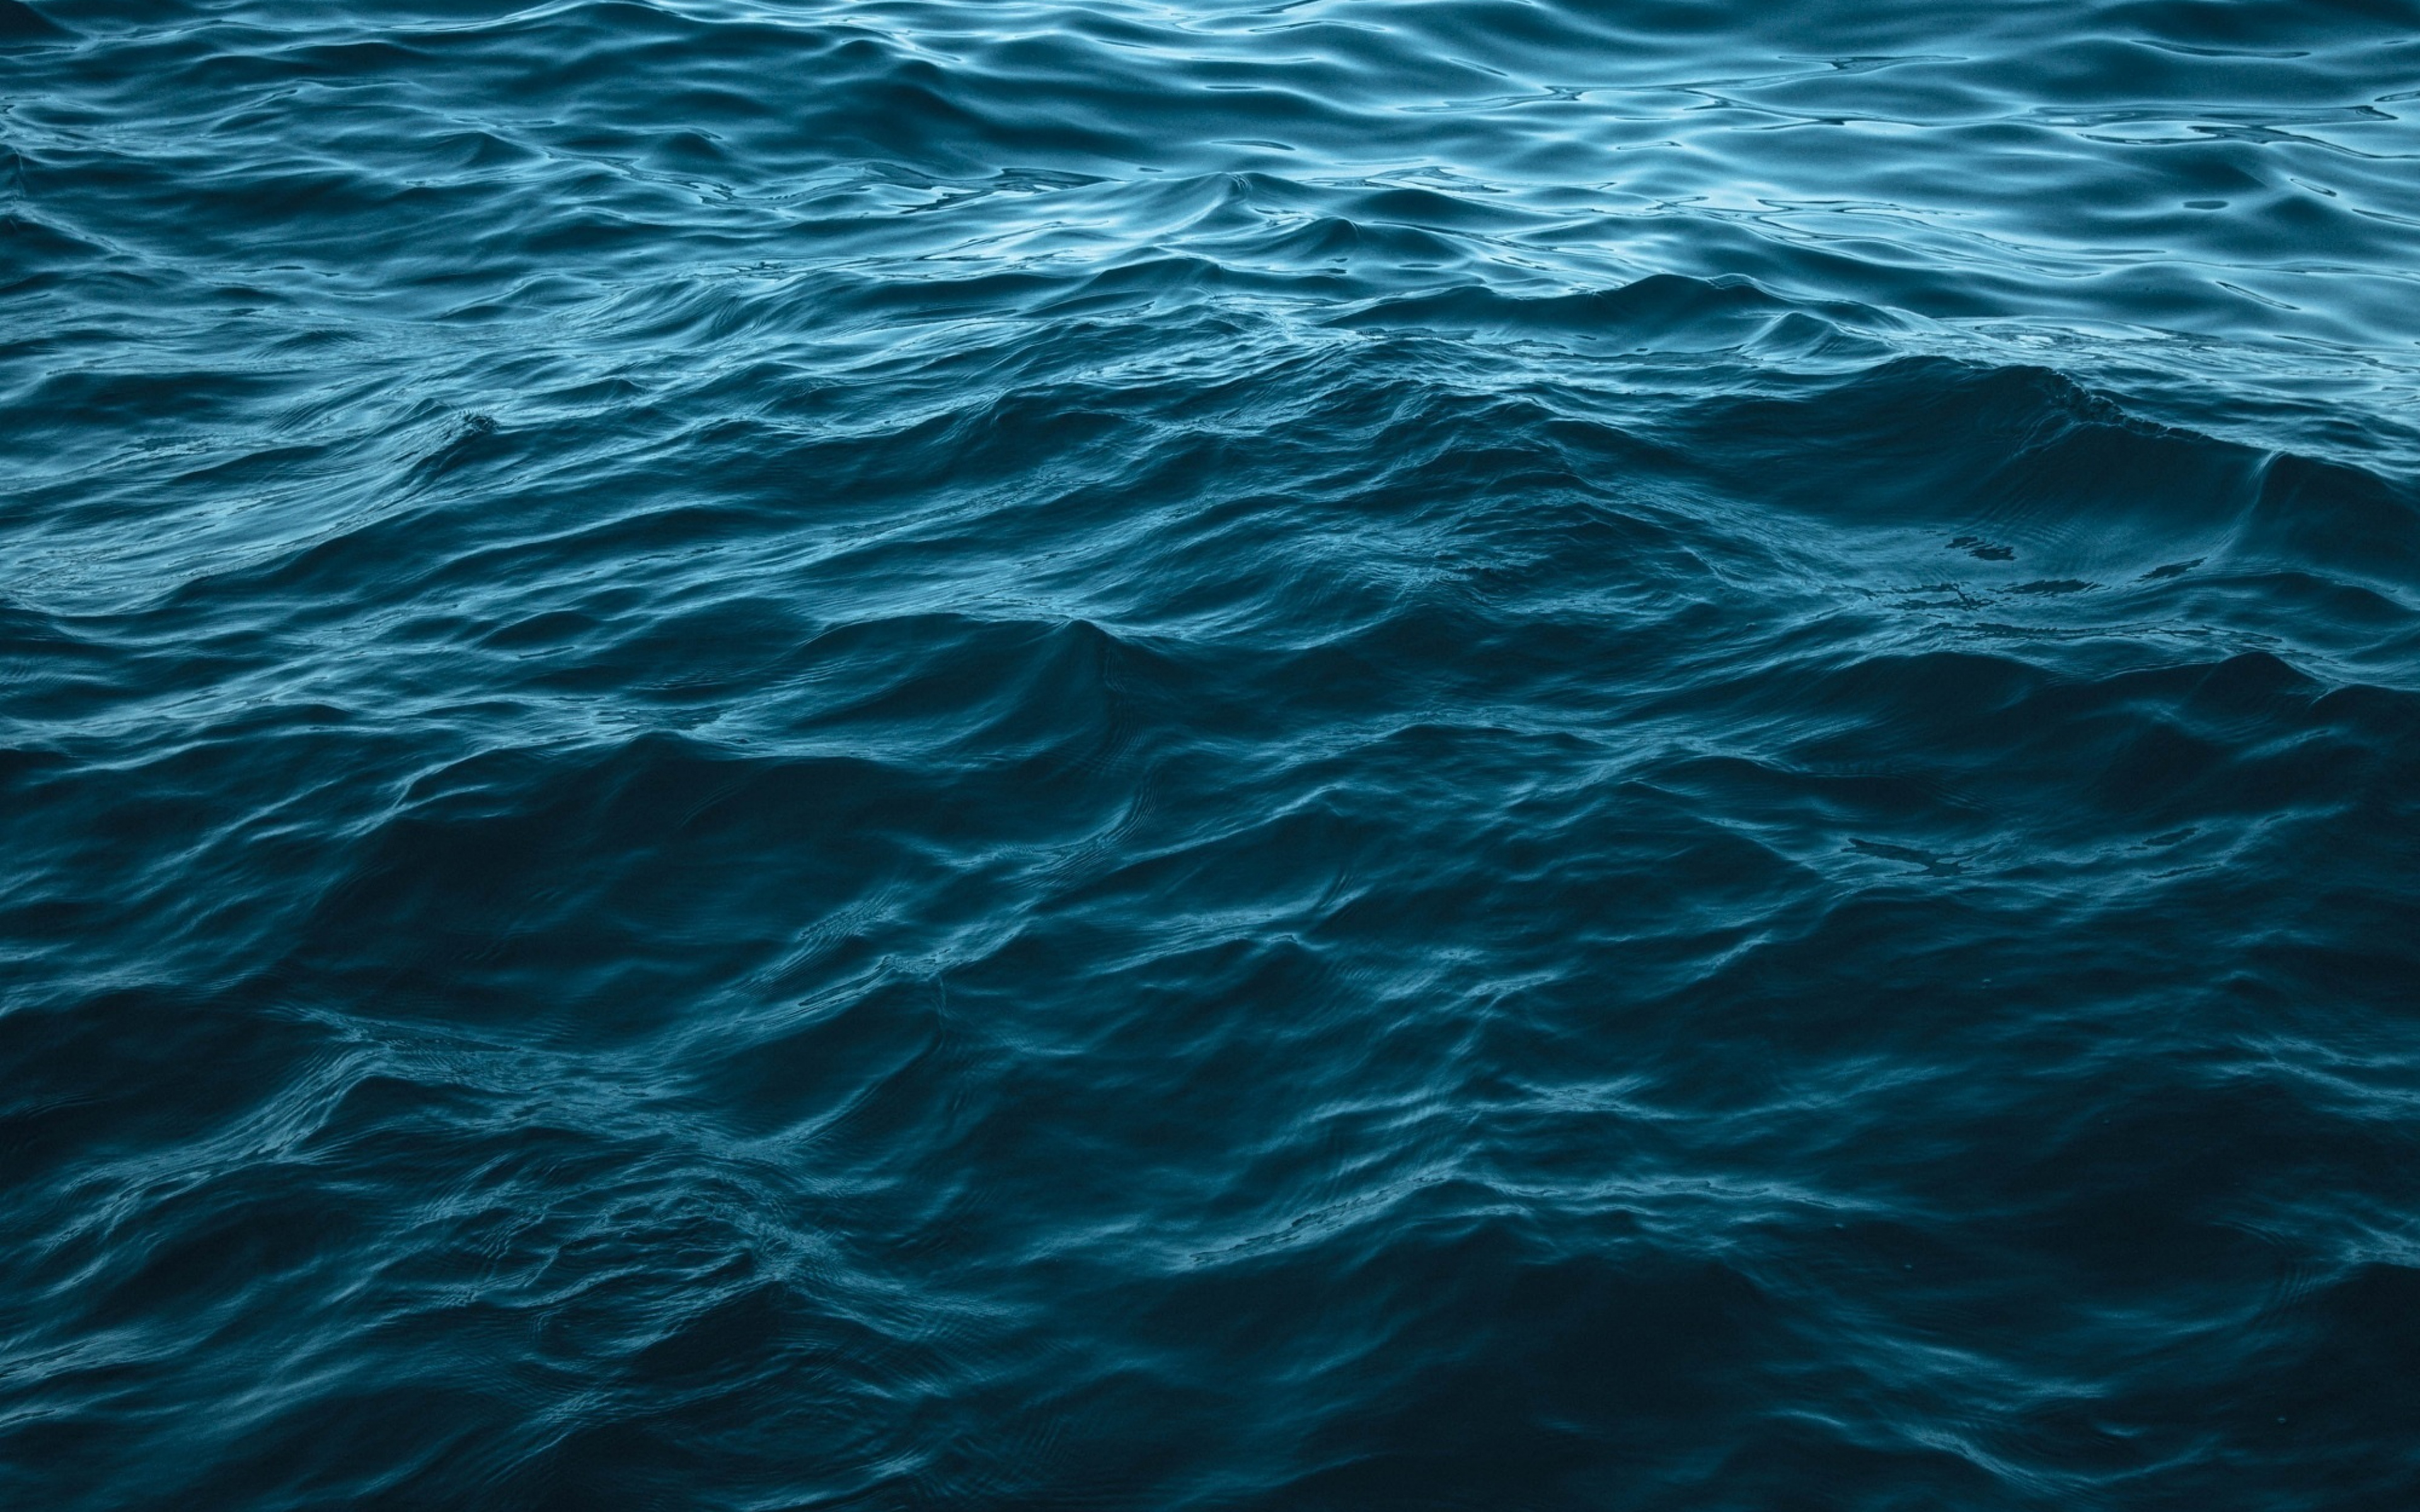  Sea Water Waves Ripples Depth Wallpaper Background Ultra HD 4K